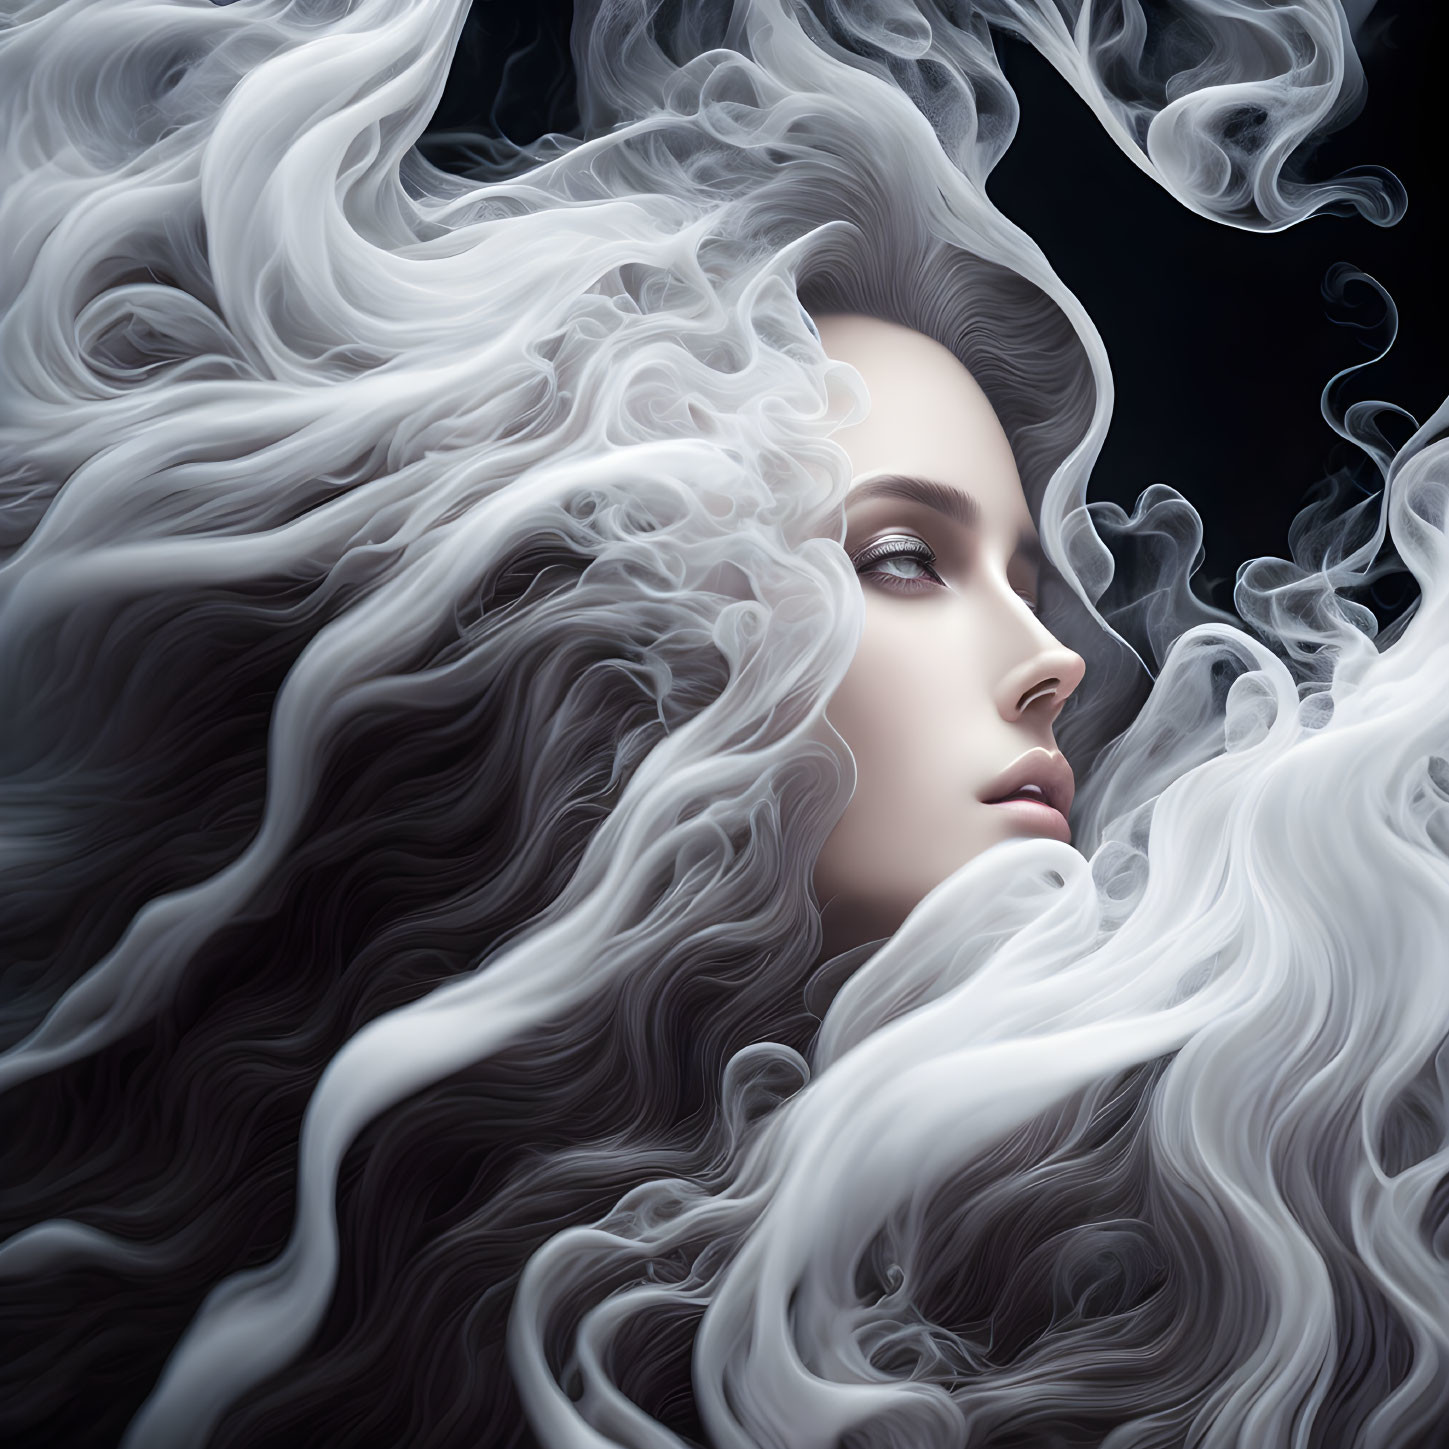 Digital artwork: Woman with voluminous white hair blending into smoke on dark background